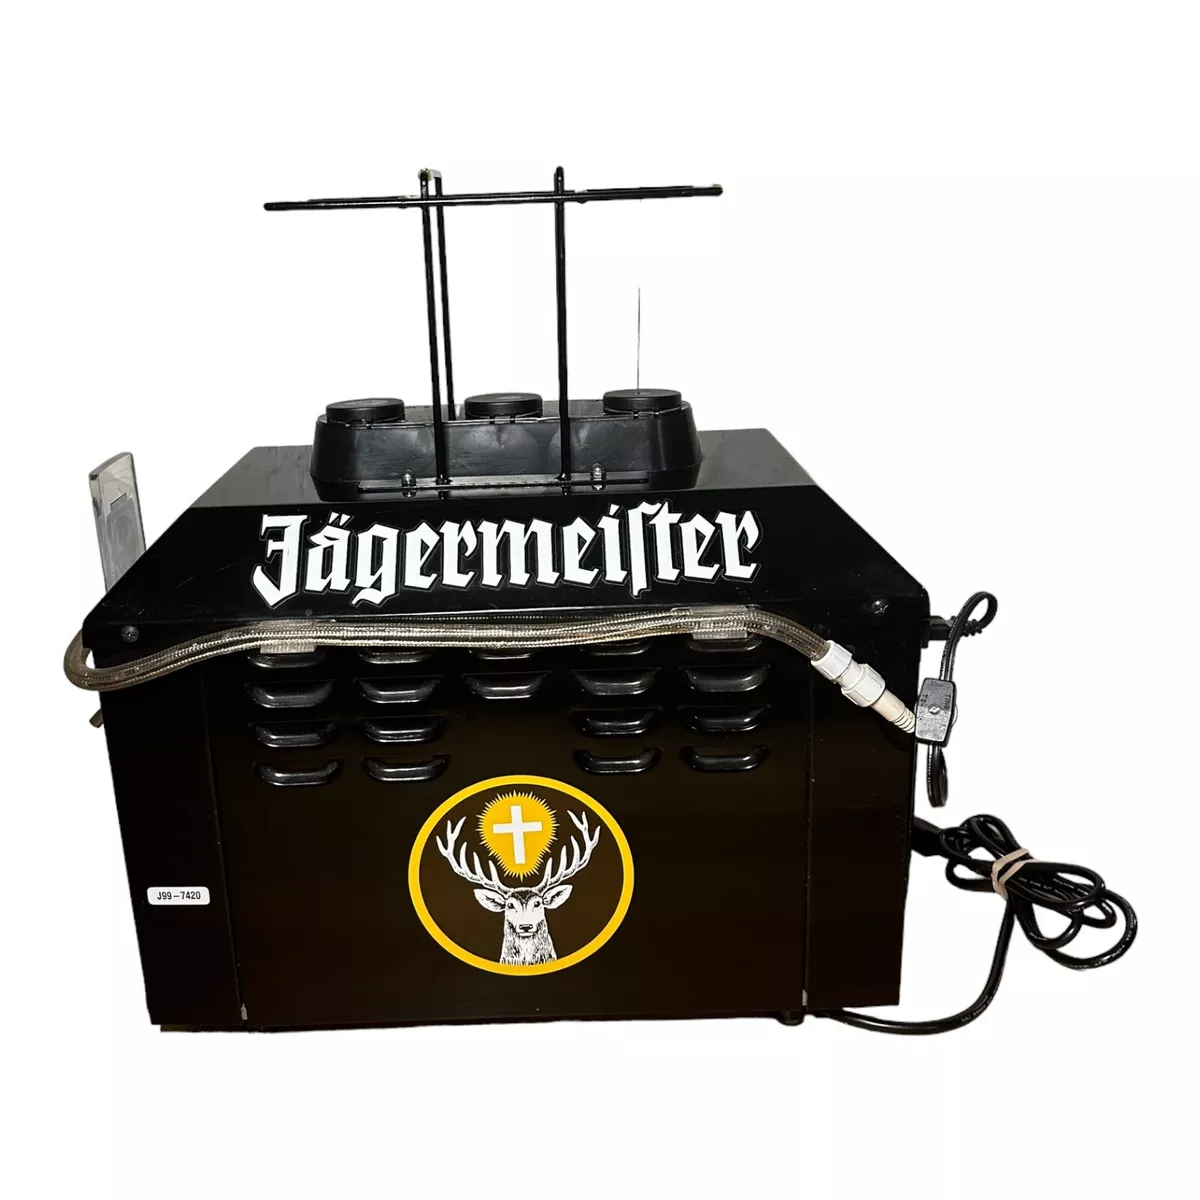 Jagermeister Machine - general for sale - by owner - craigslist